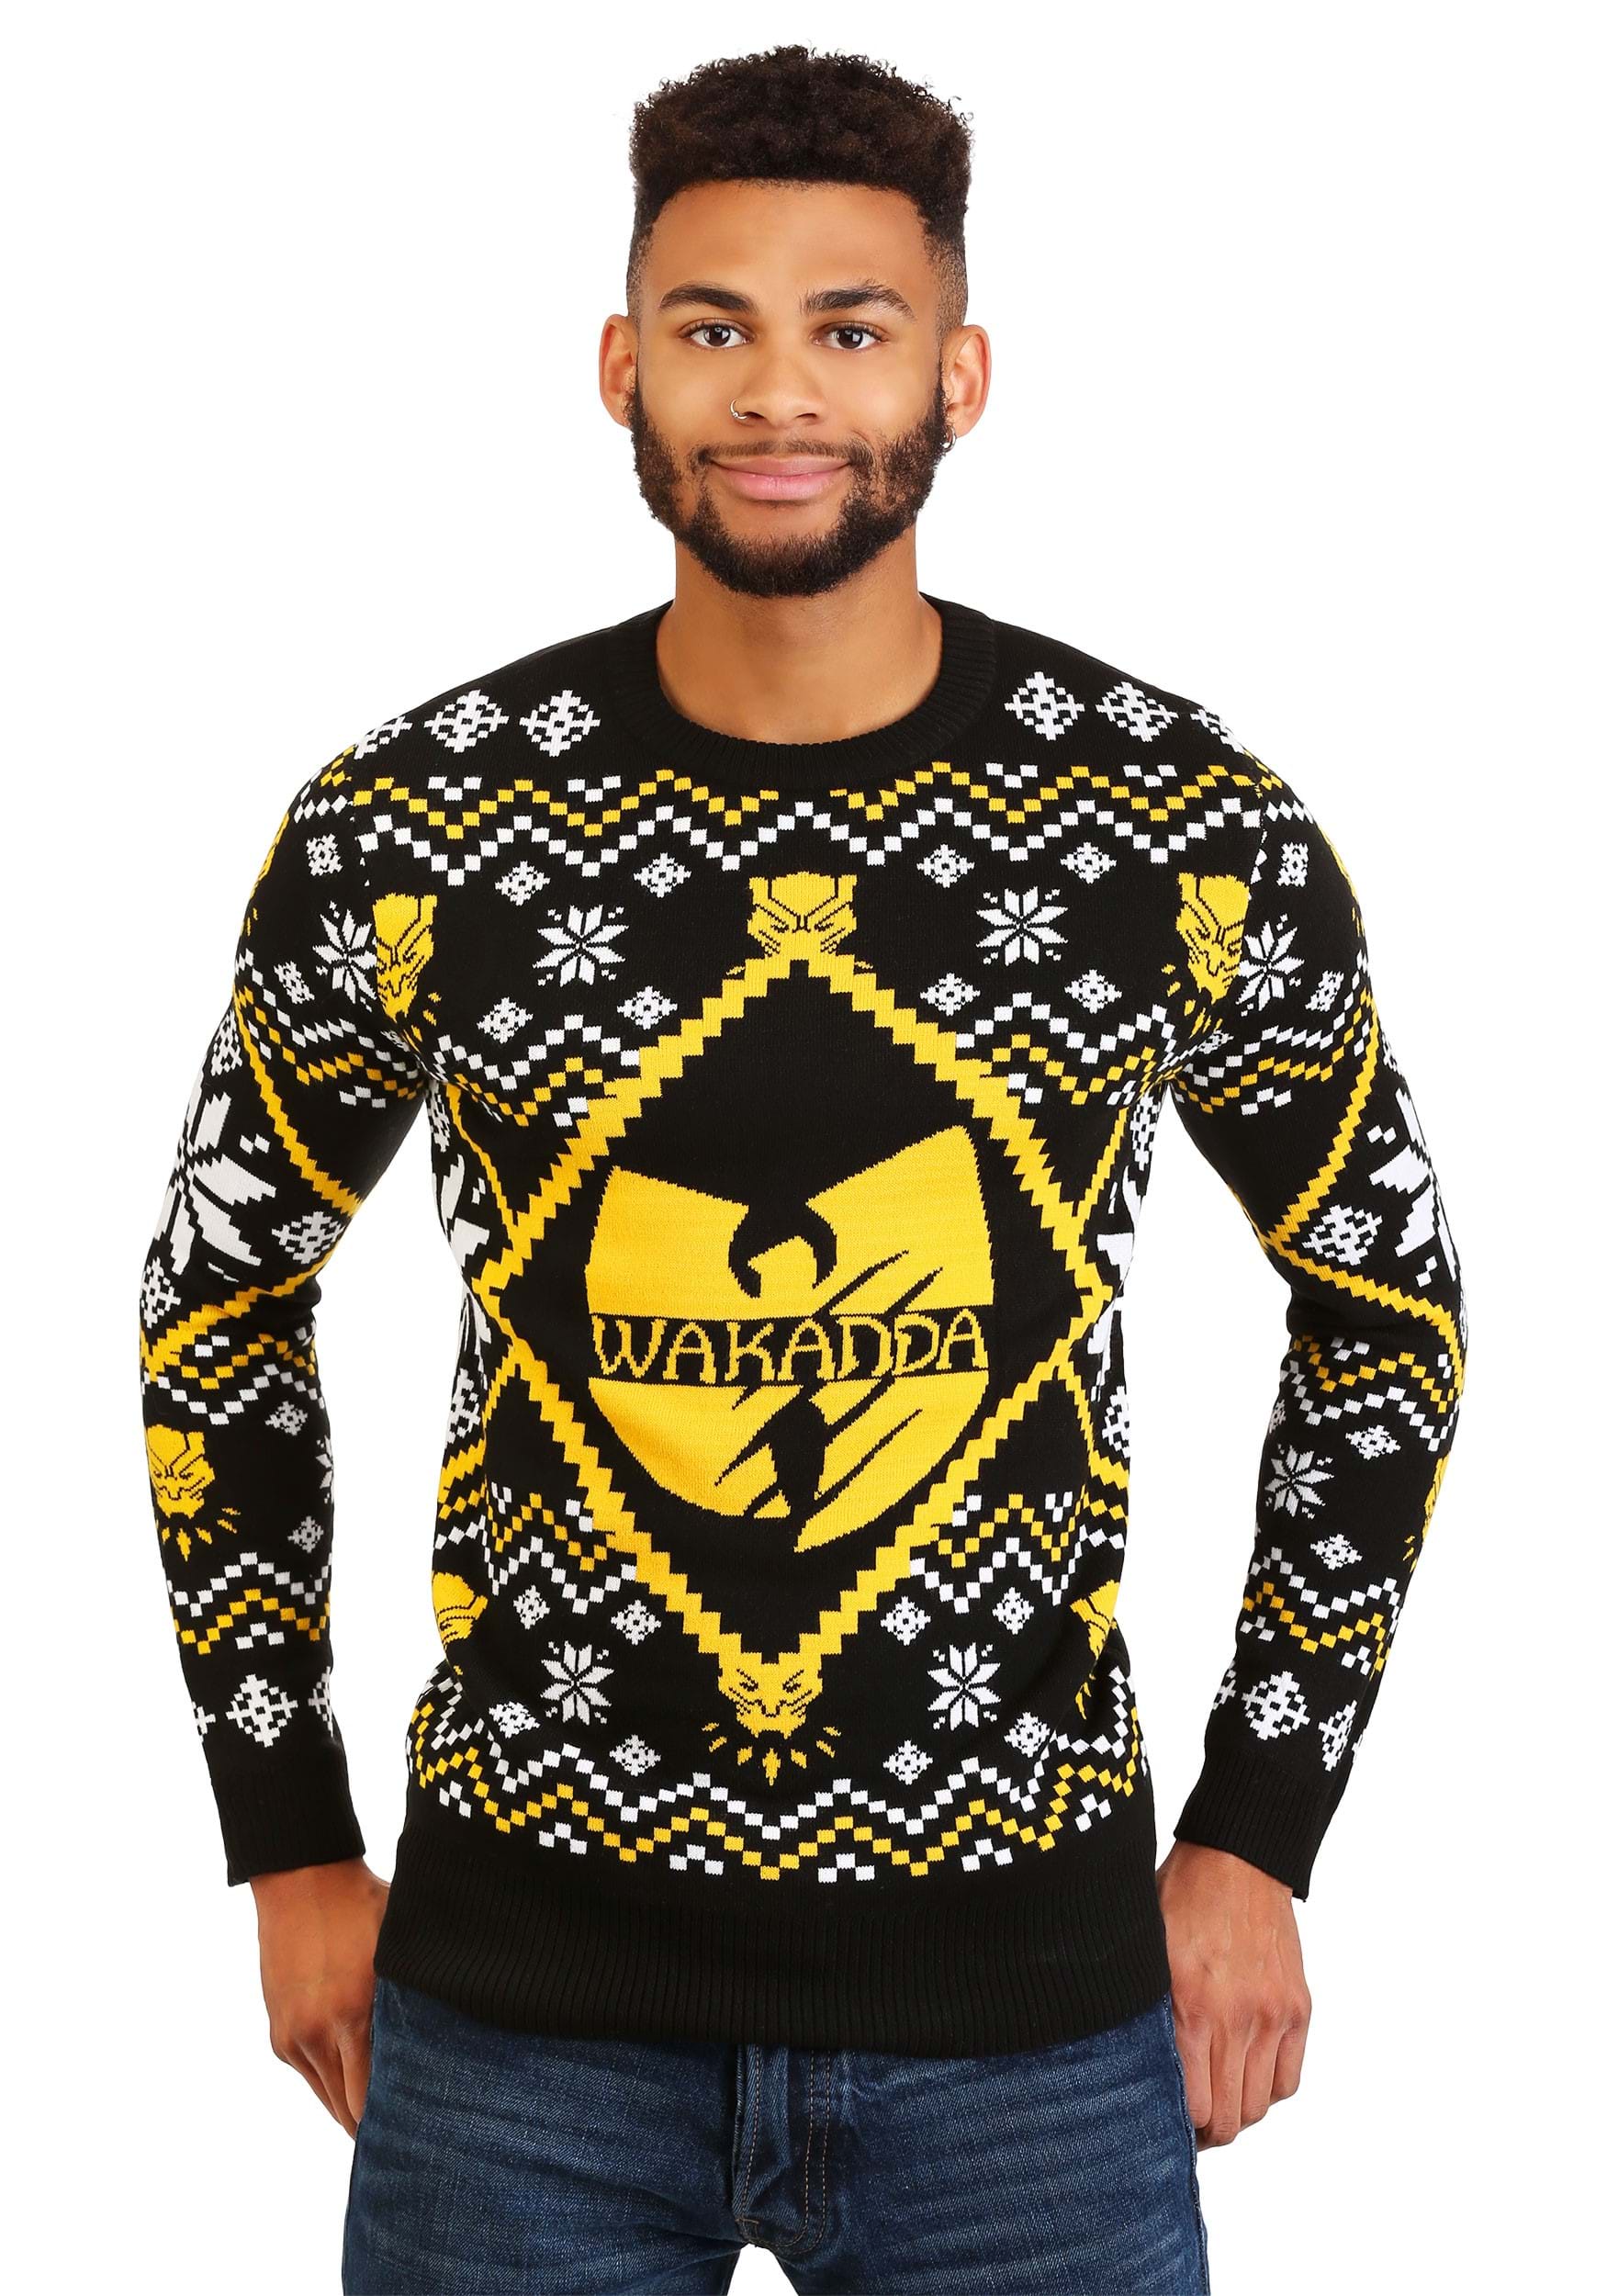 Black Panther Wakanda Intarsia Adult Knit Ugly Christmas Sweater